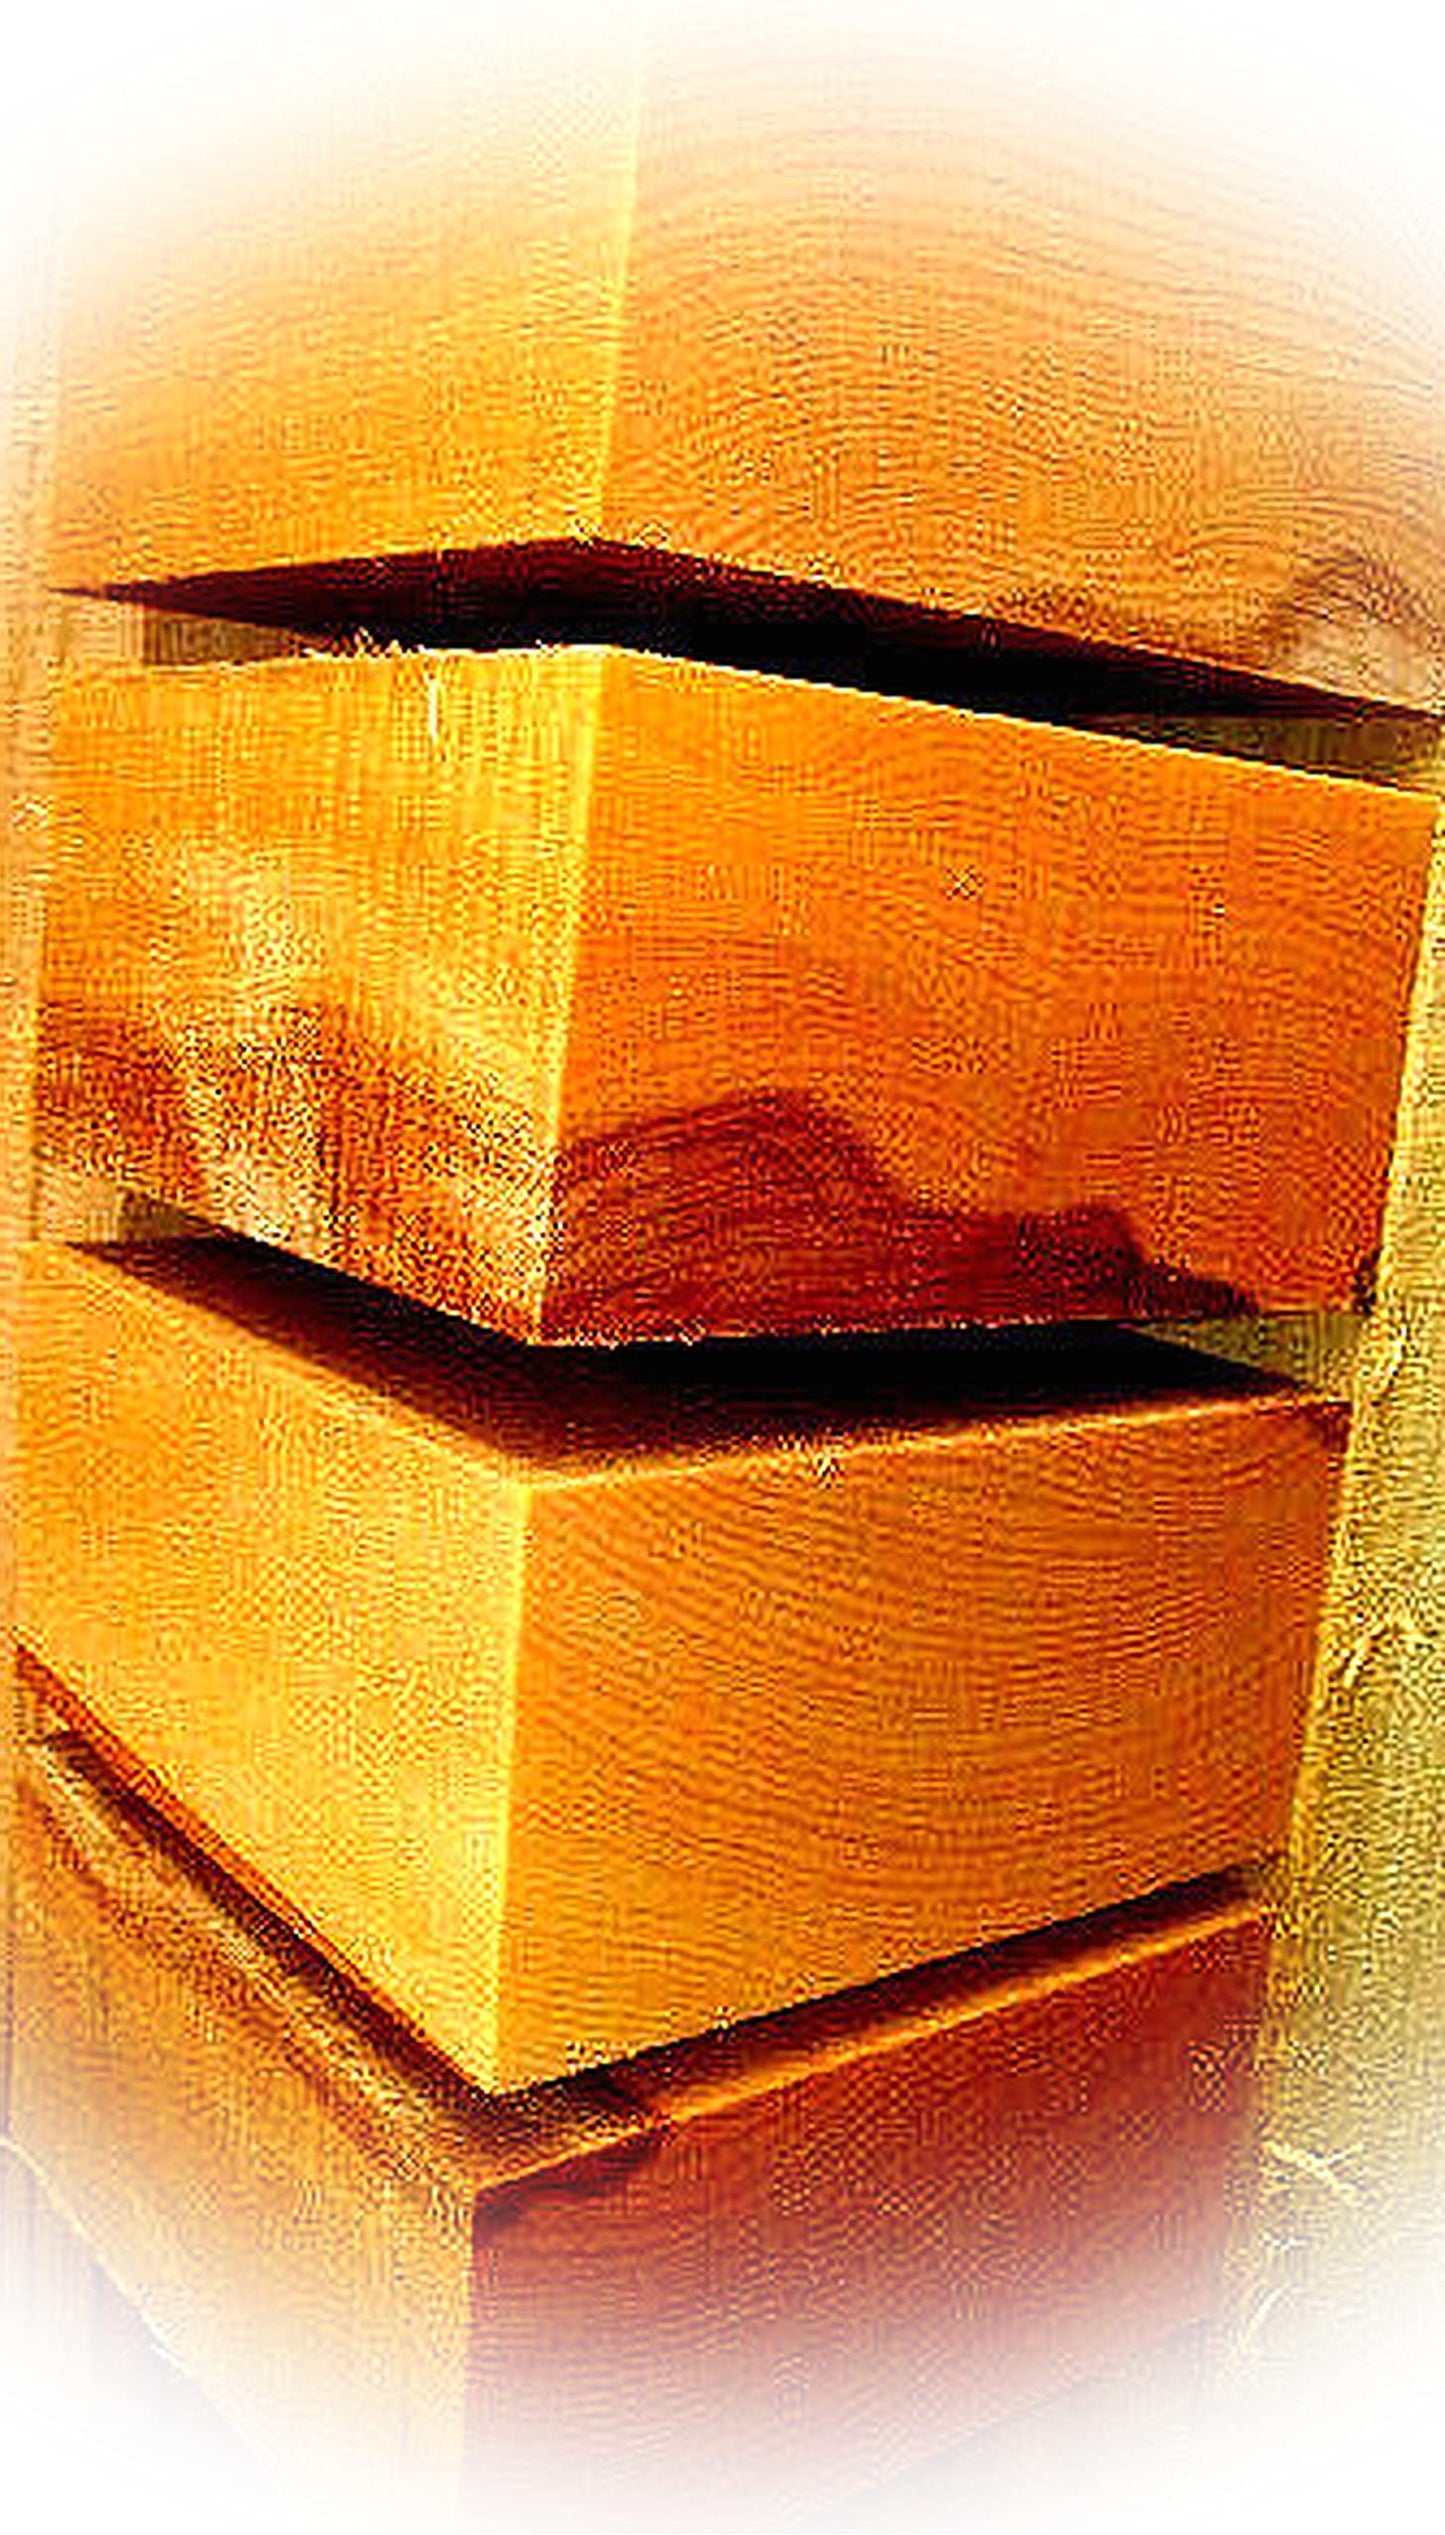 New Four Beautiful Beech Bowl Turning Blanks Lumber Wood Lathe Carve 6" X 6" X 3" Craft Wood Kit Set Supplies MON-1124TO